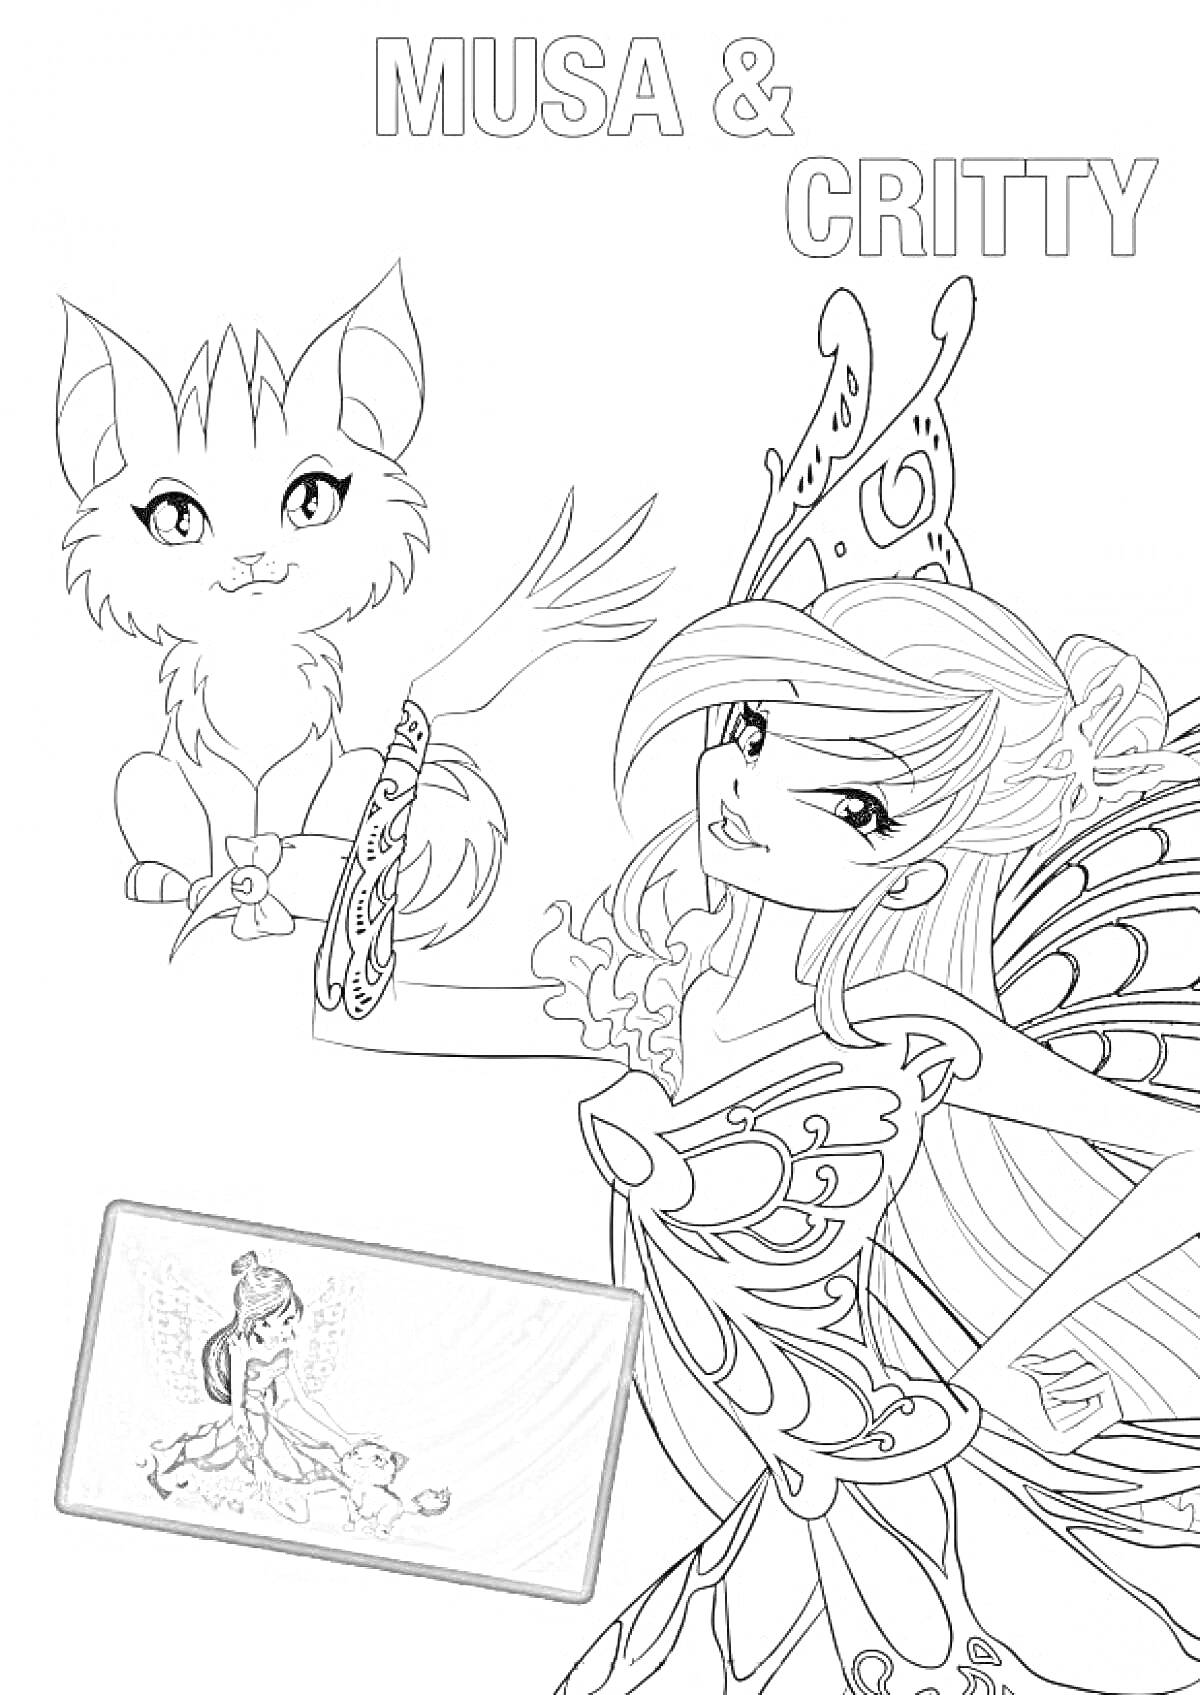 Муза и Критти в стиле Баттерфликс, летающая фея с крыльями и волшебная кошка